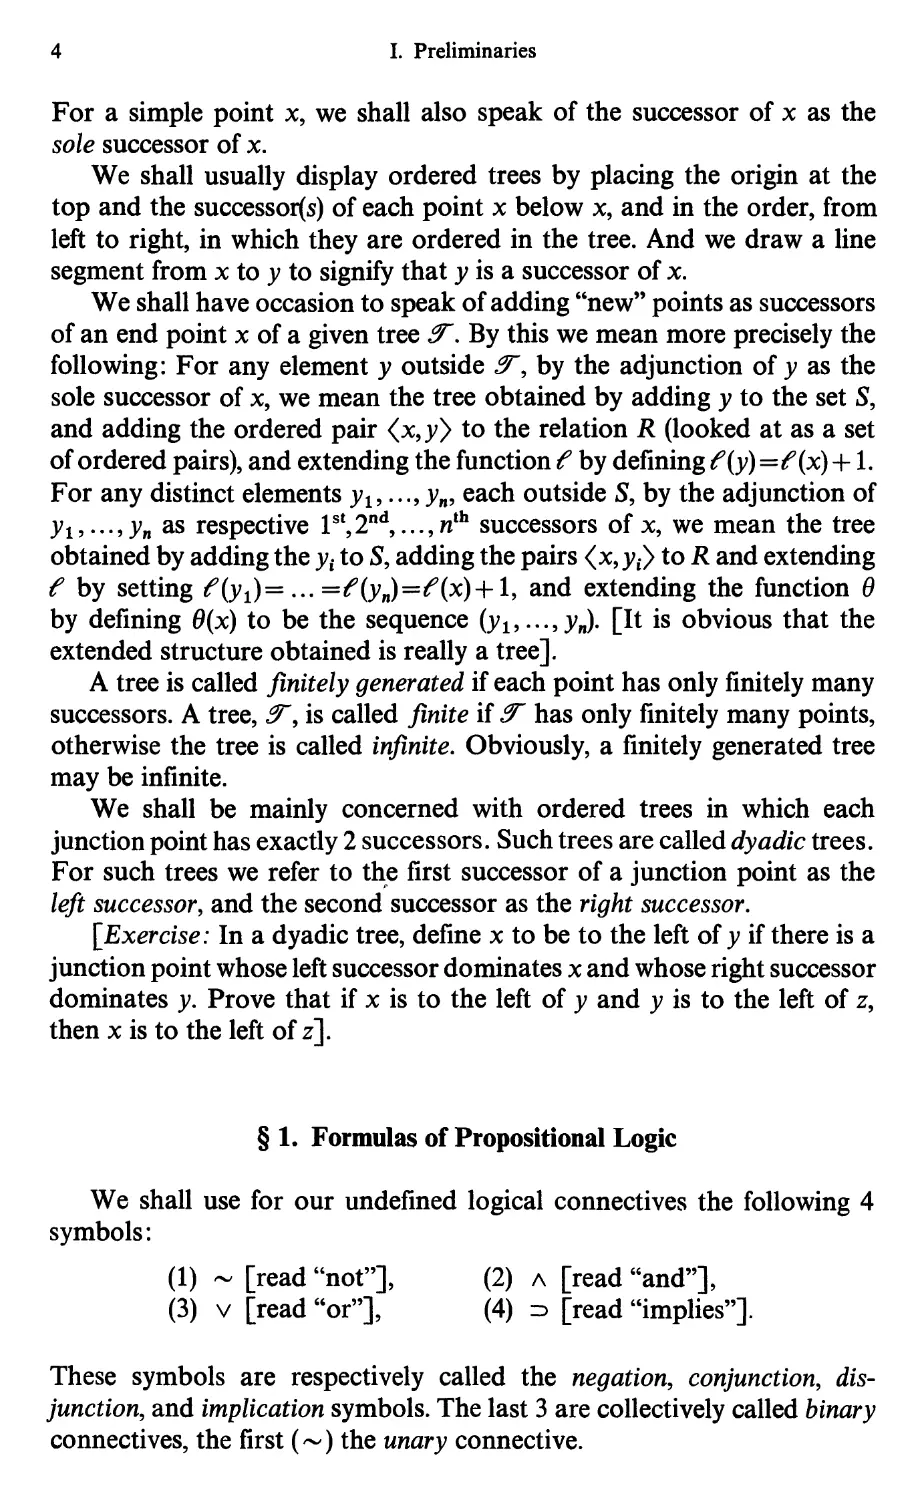 1.2 Formulas of Propositional Logic